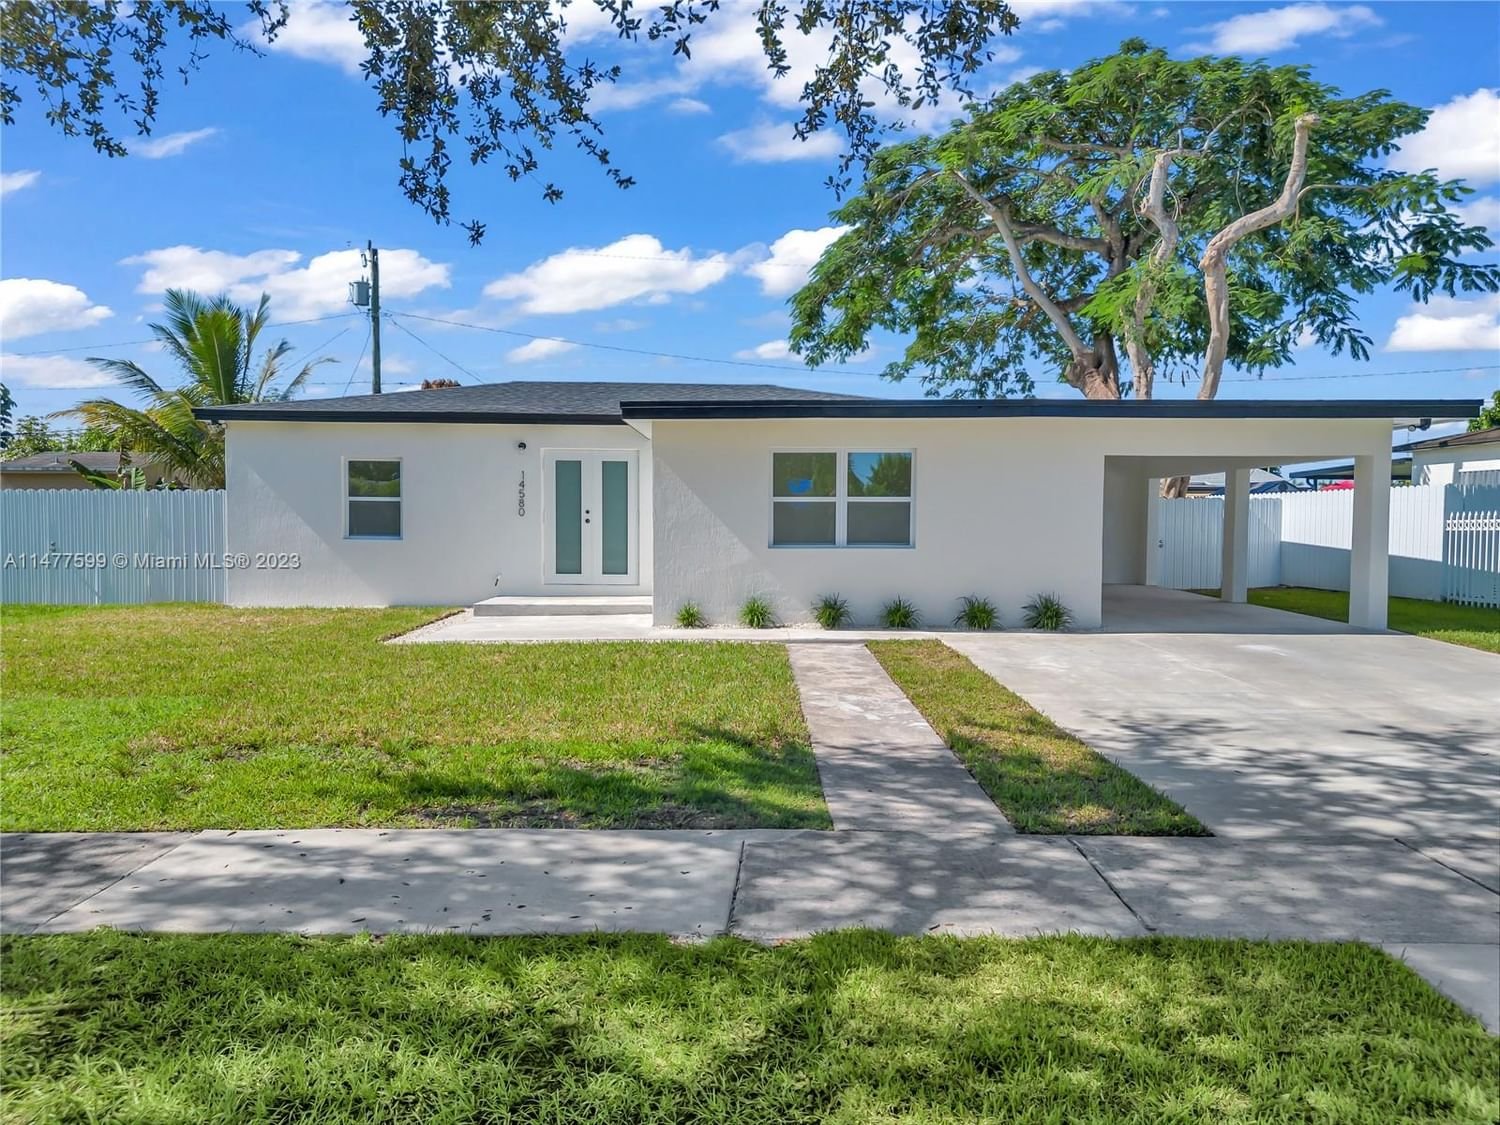 Real estate property located at 14580 Harrison St, Miami-Dade County, Miami, FL